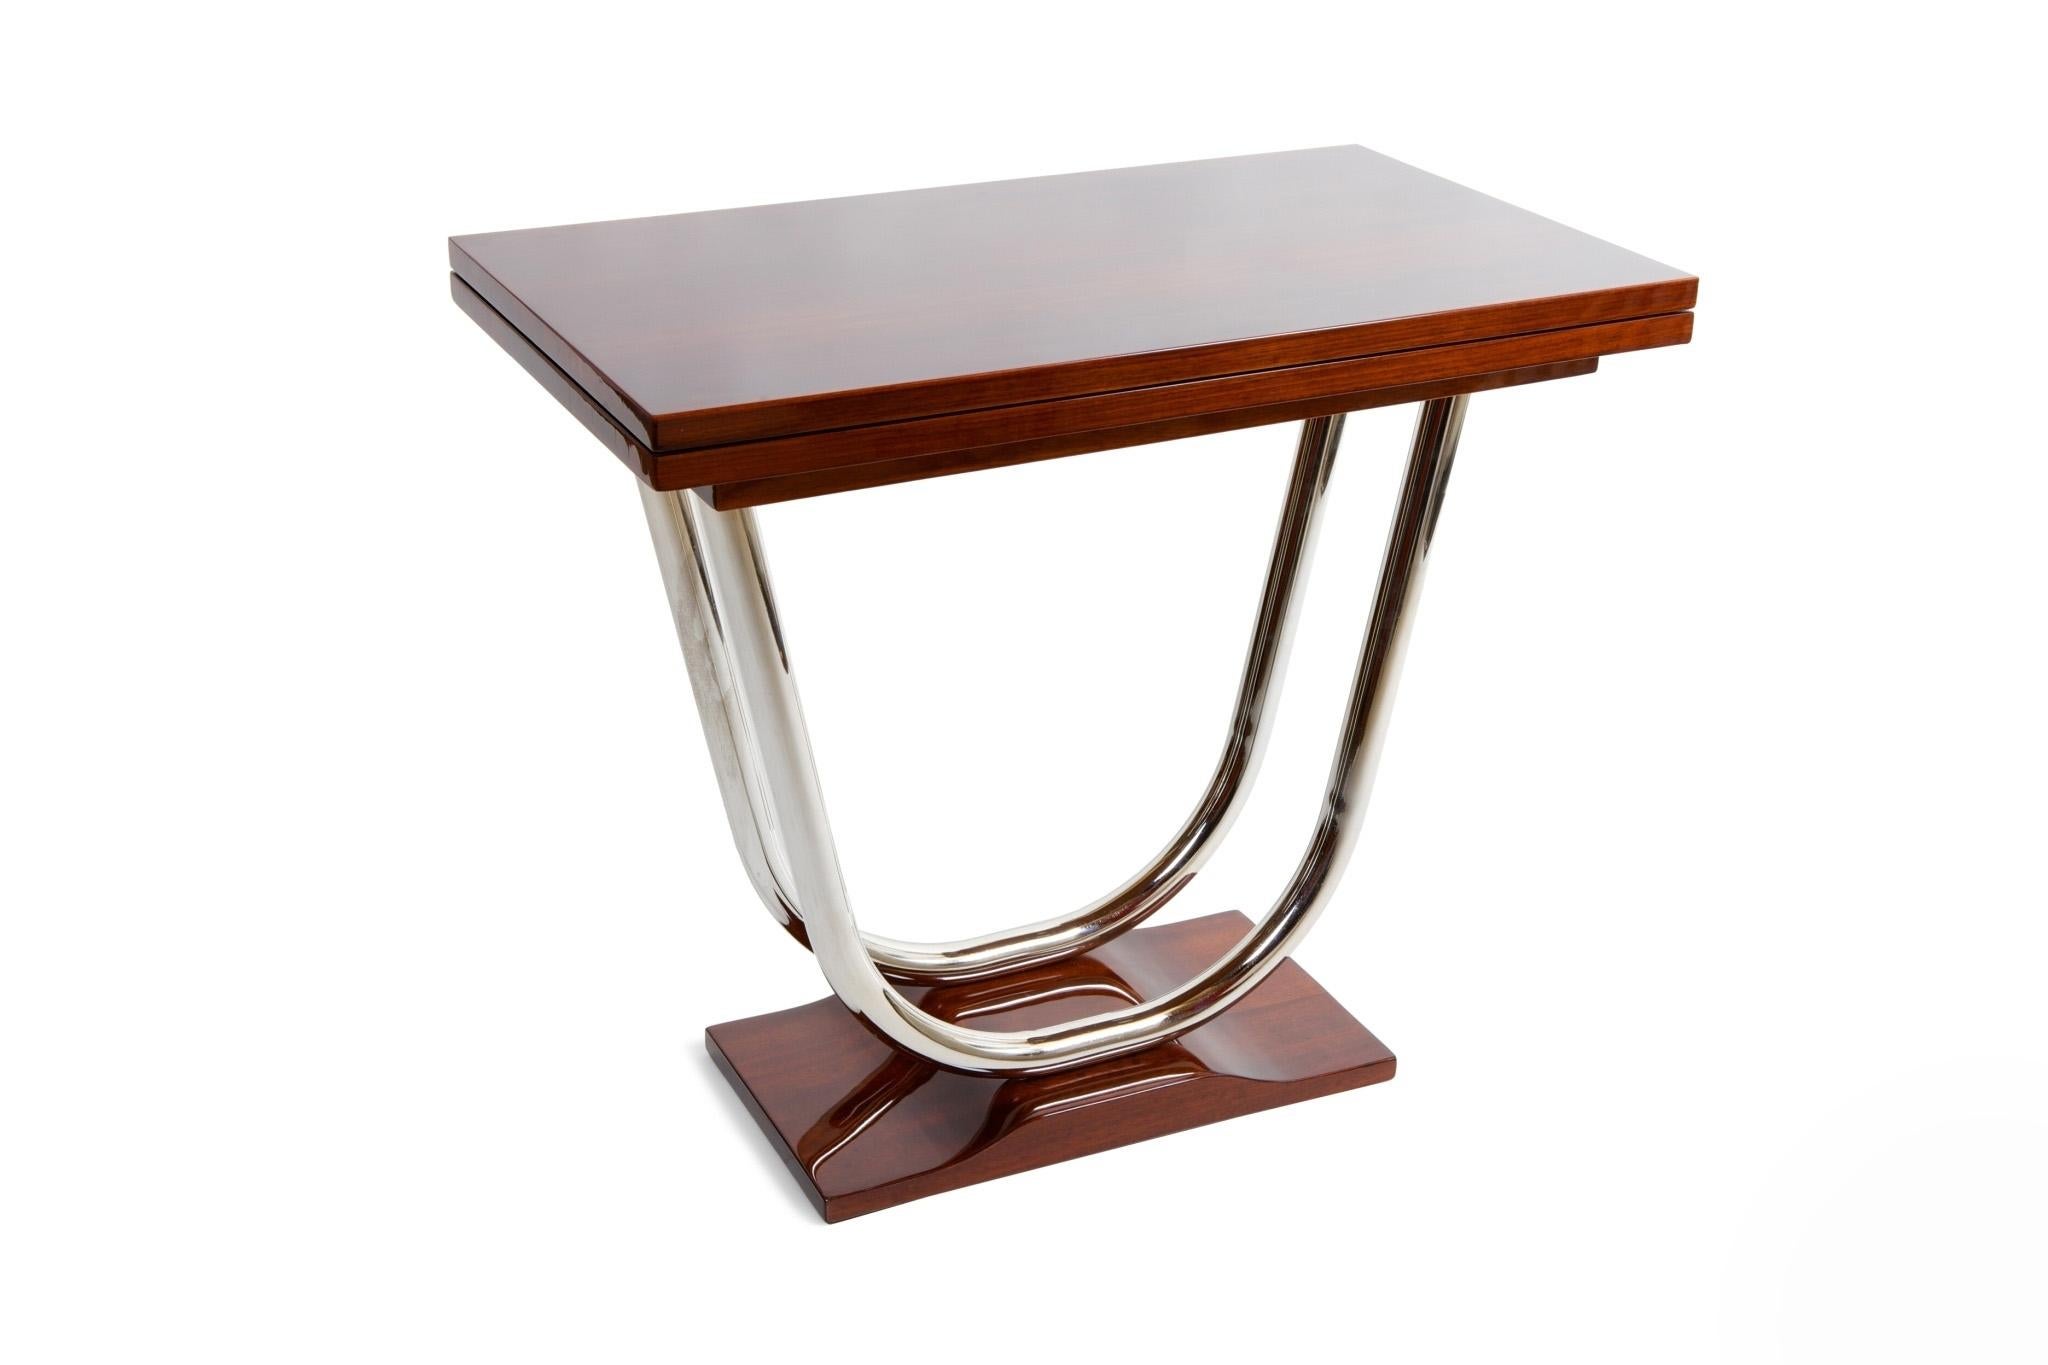 Unique Art Deco extendable coffee table.
Architect: Gorgeous Dominique
Source: France
Material: Chrome, Palisander
Period: 1920-1929

Dimensions after the extending:
Height 72cm
Width 100cm
Depth 85cm.





 